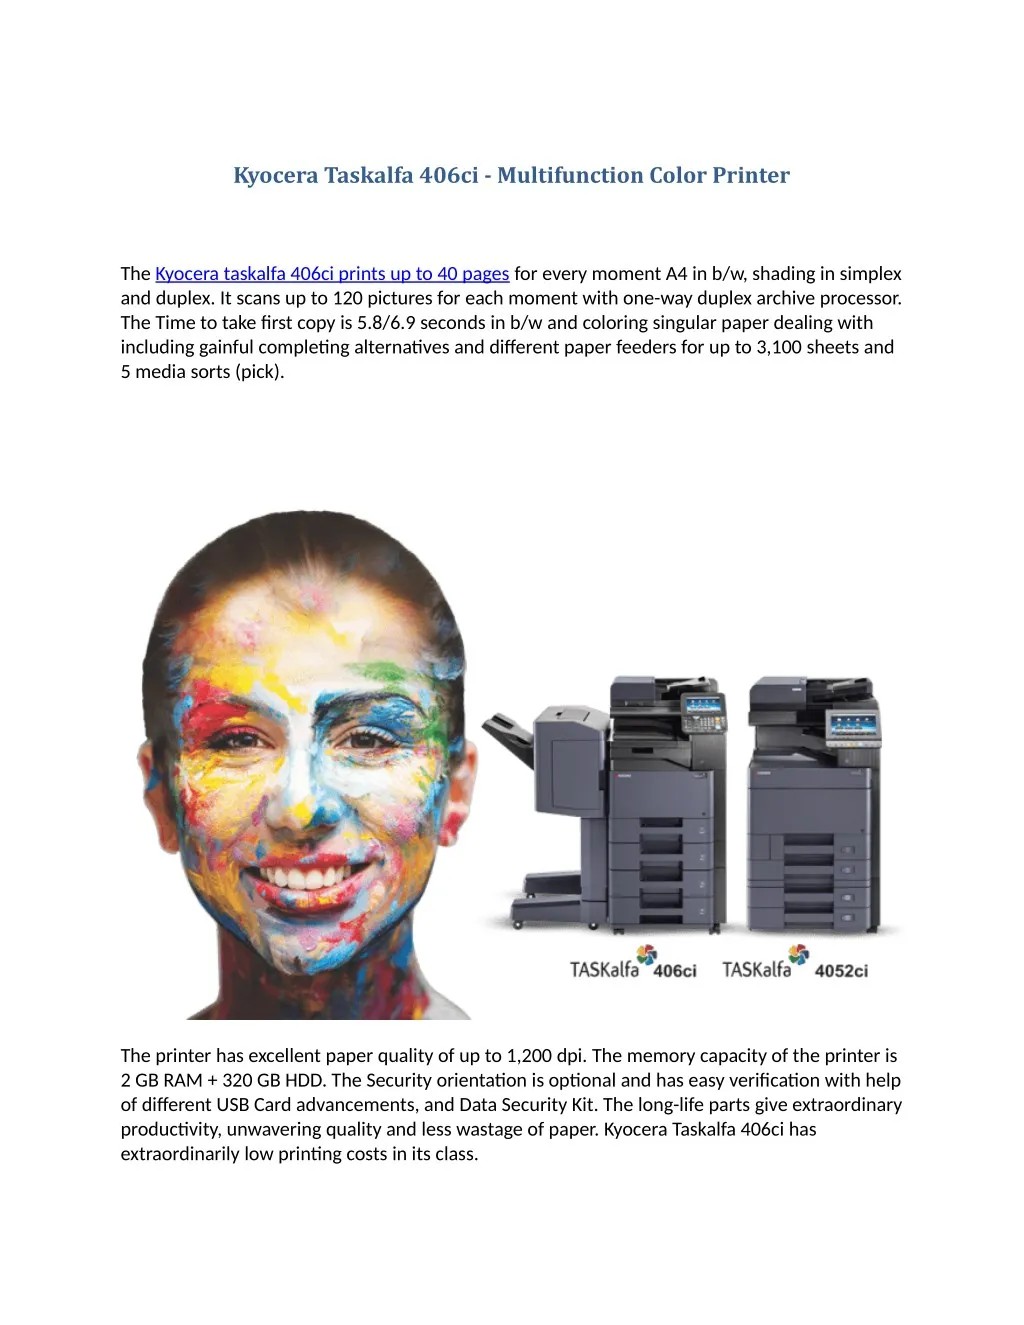 kyocera taskalfa 406ci multifunction color printer